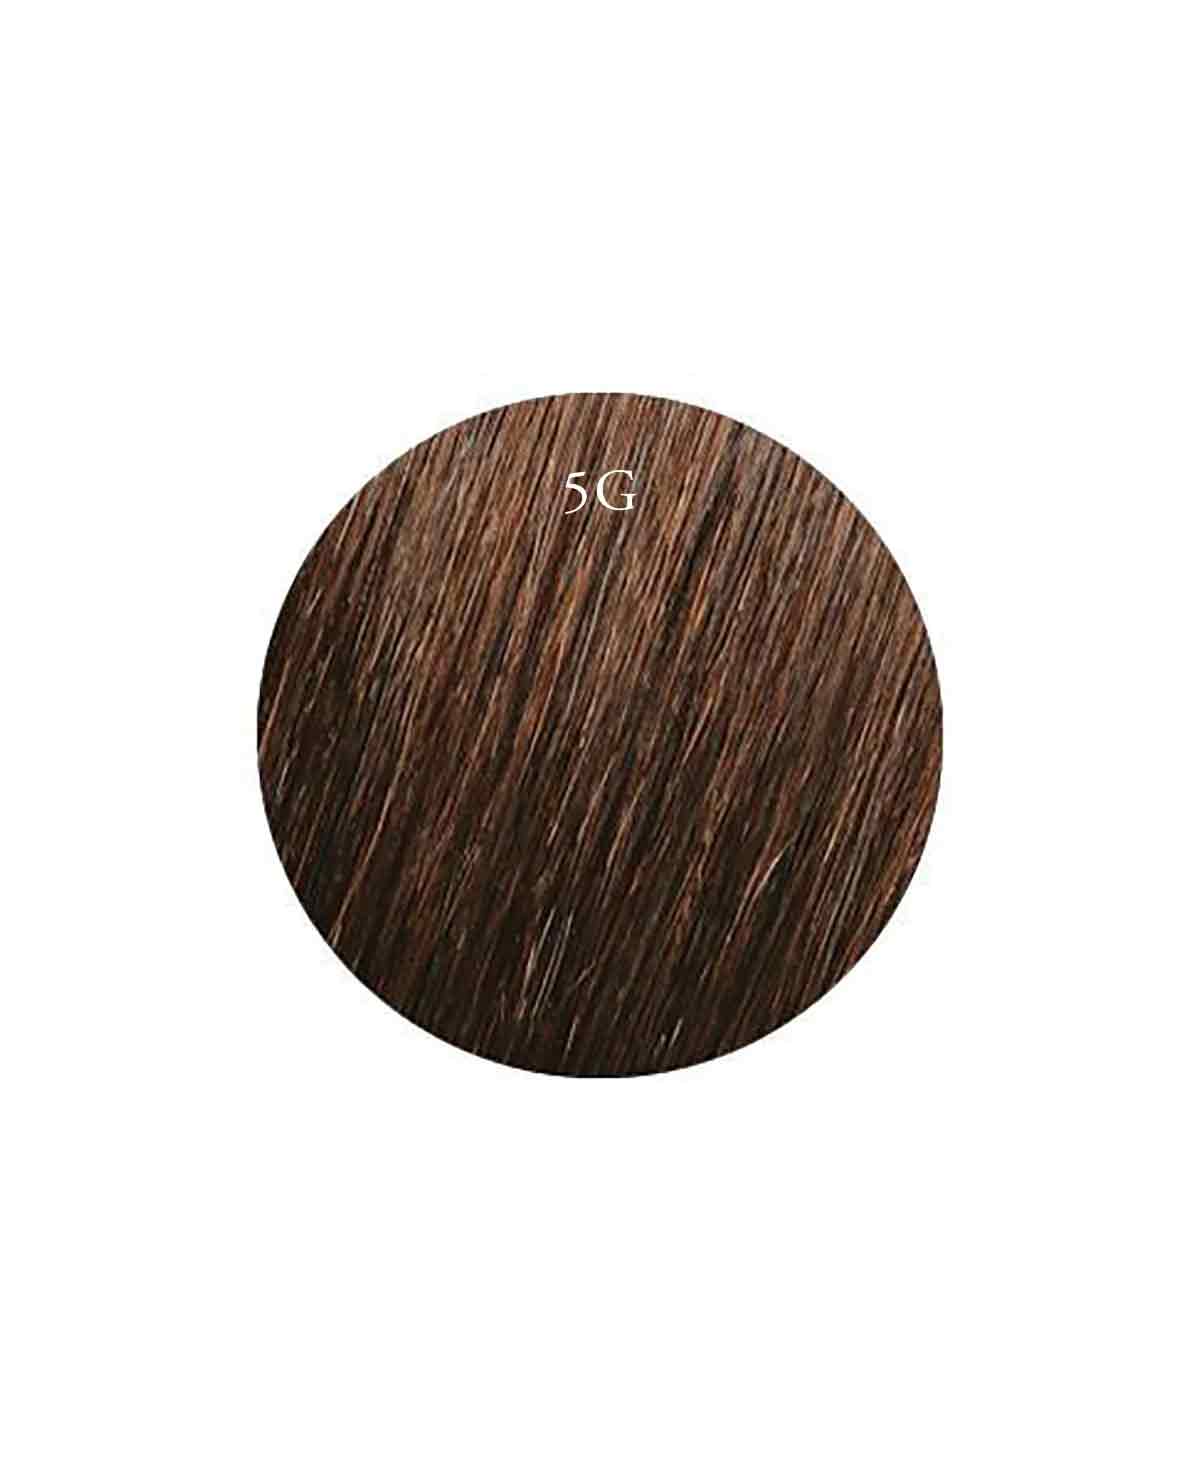 Showpony 45-50cm (20") 7 Piece Clip In Hair Extension - 5G Brown